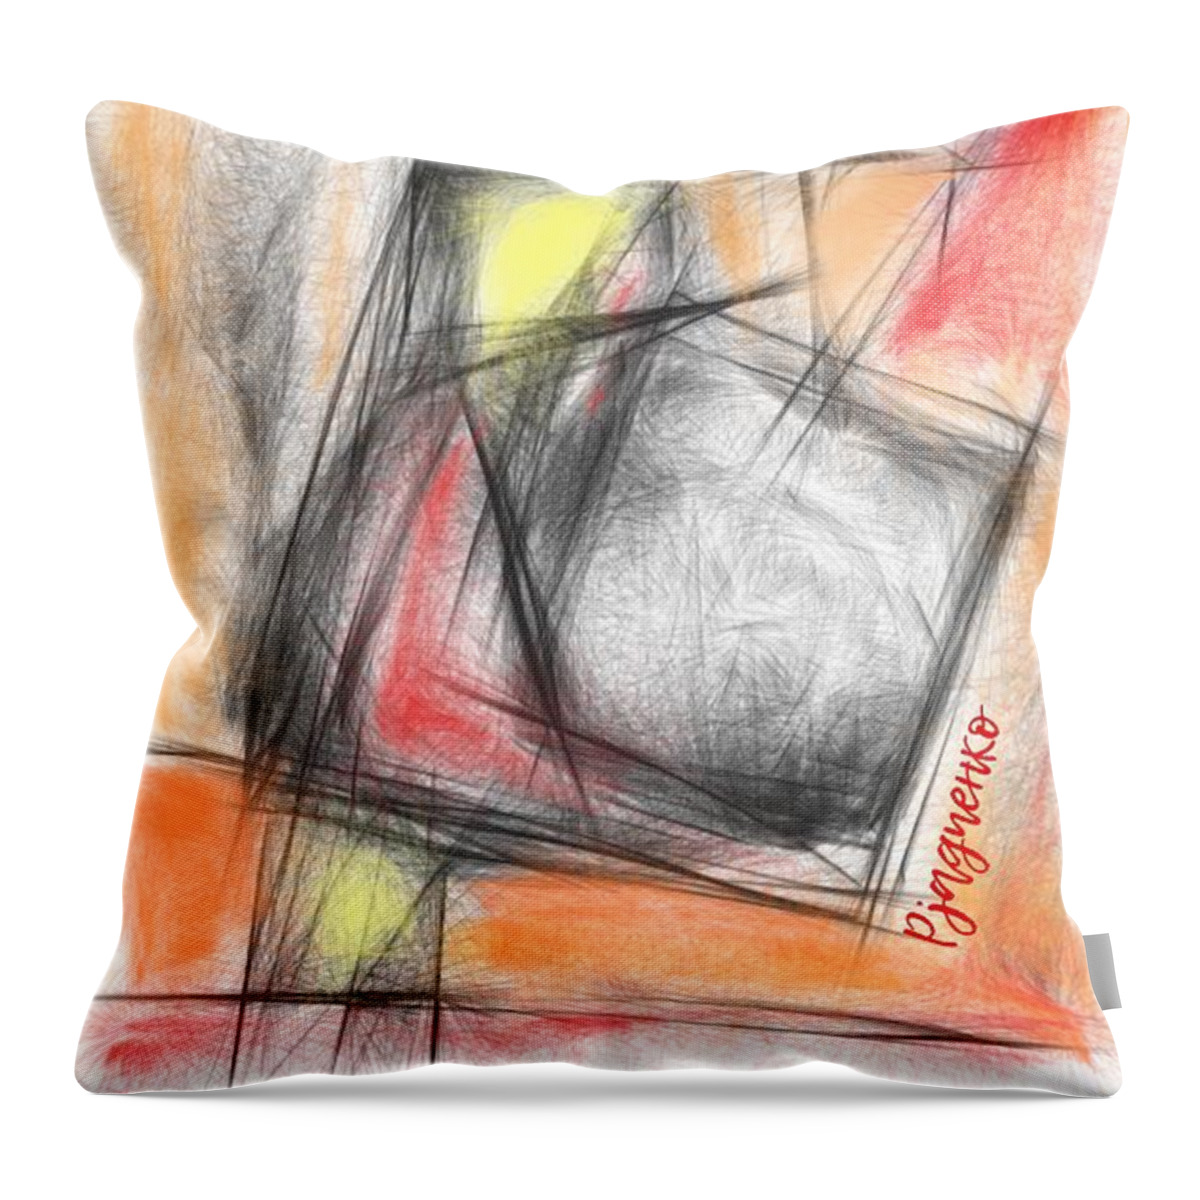 Red Throw Pillow featuring the digital art Vitrage 14 by Ljev Rjadcenko